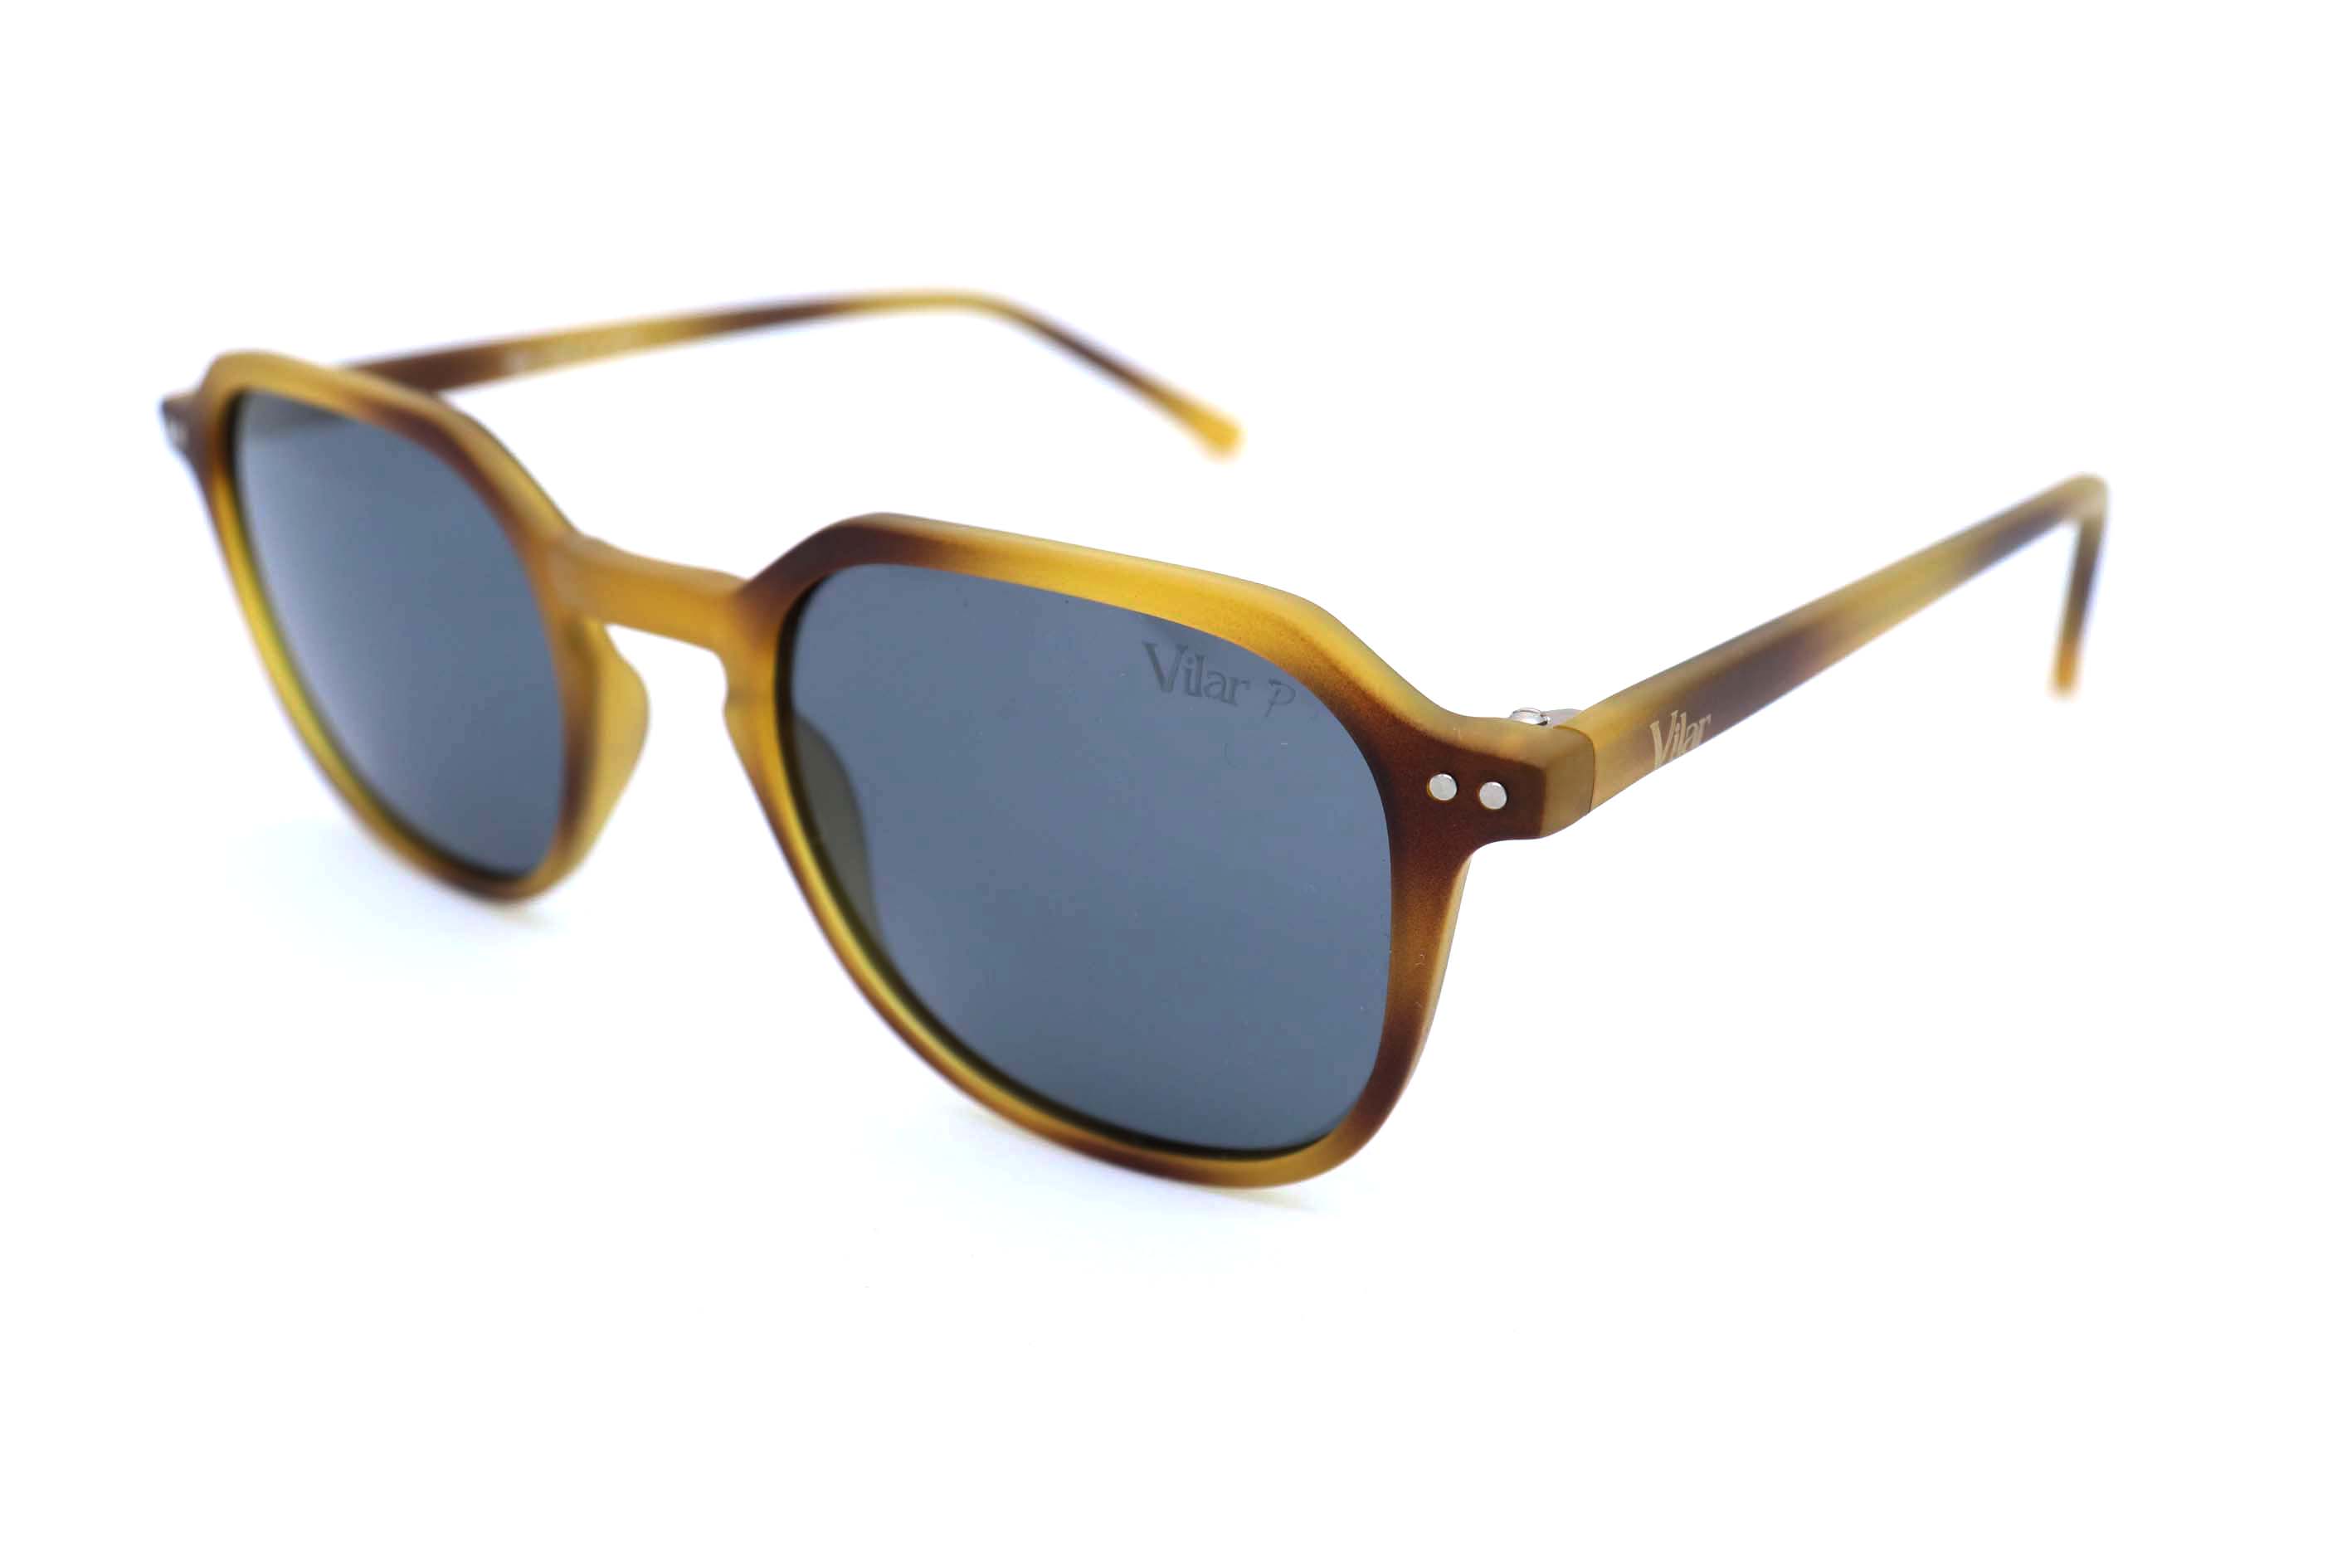  Vilar Sunglasses- S335-C2-49-22-140